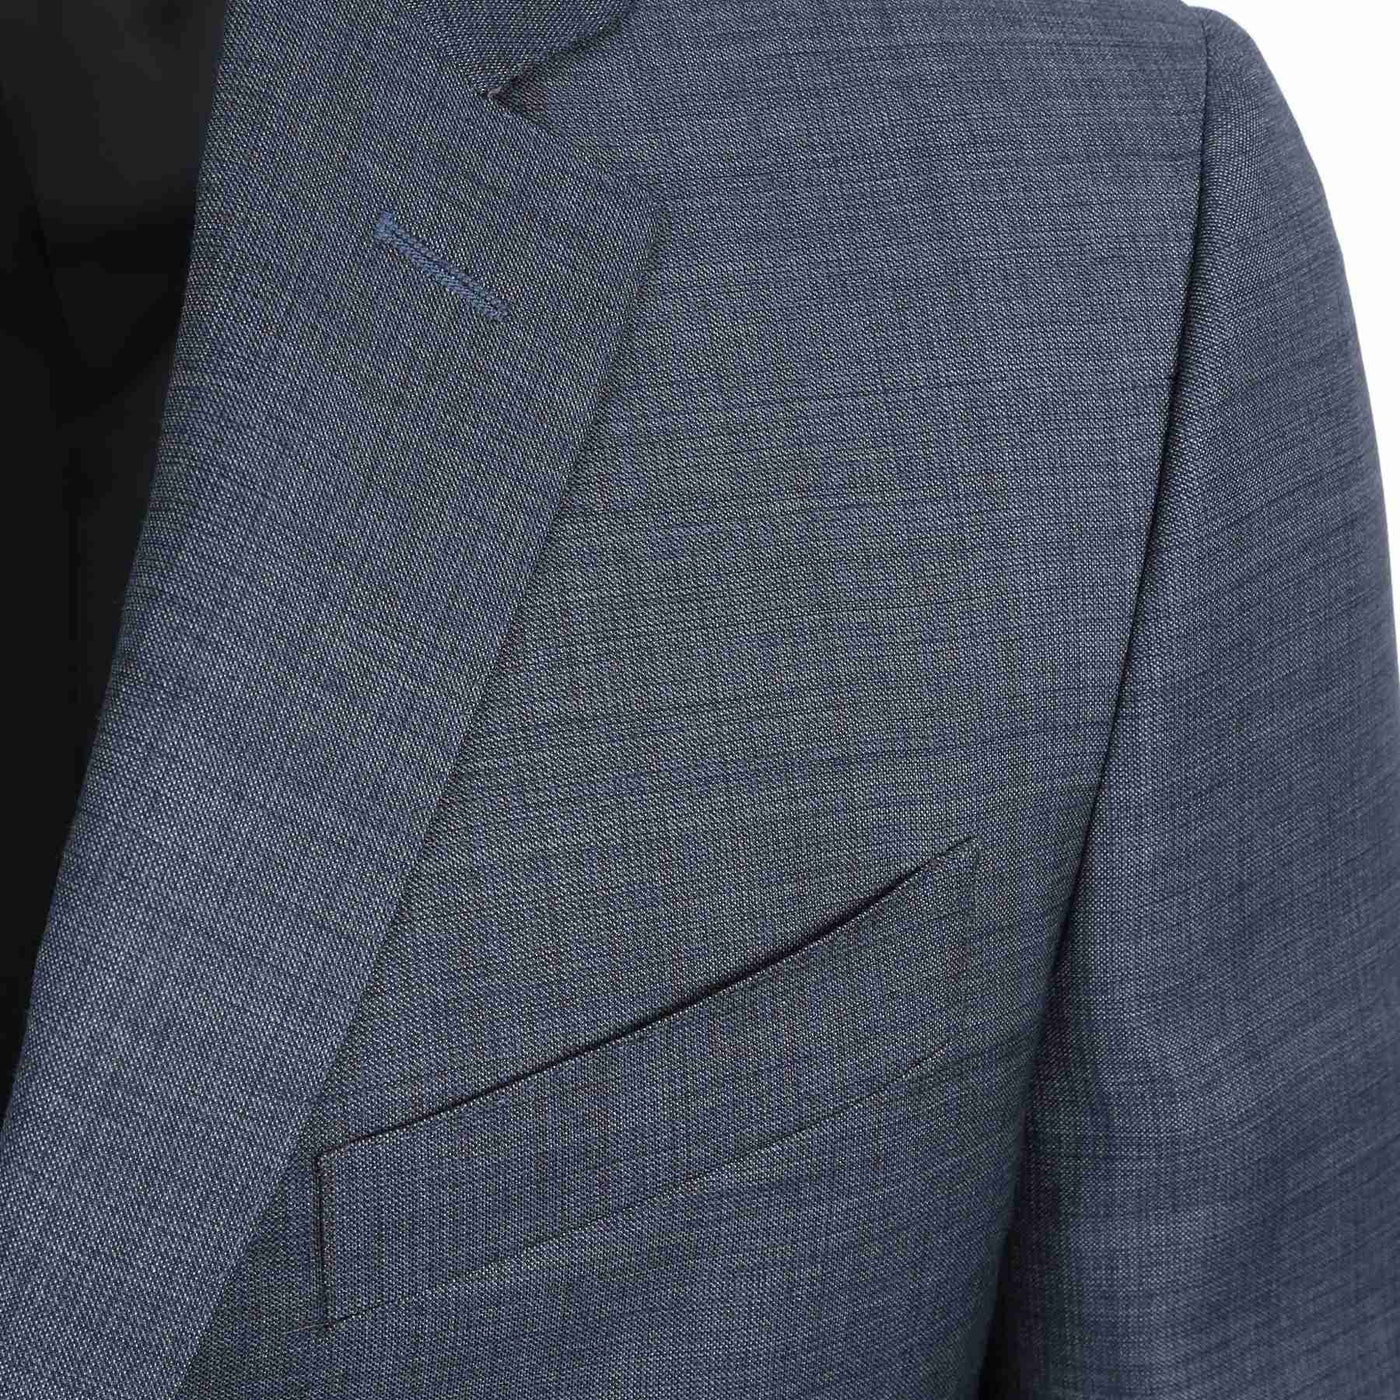 Canali Blue Grey Notch Lapel Suit in Denim Blue Lapel